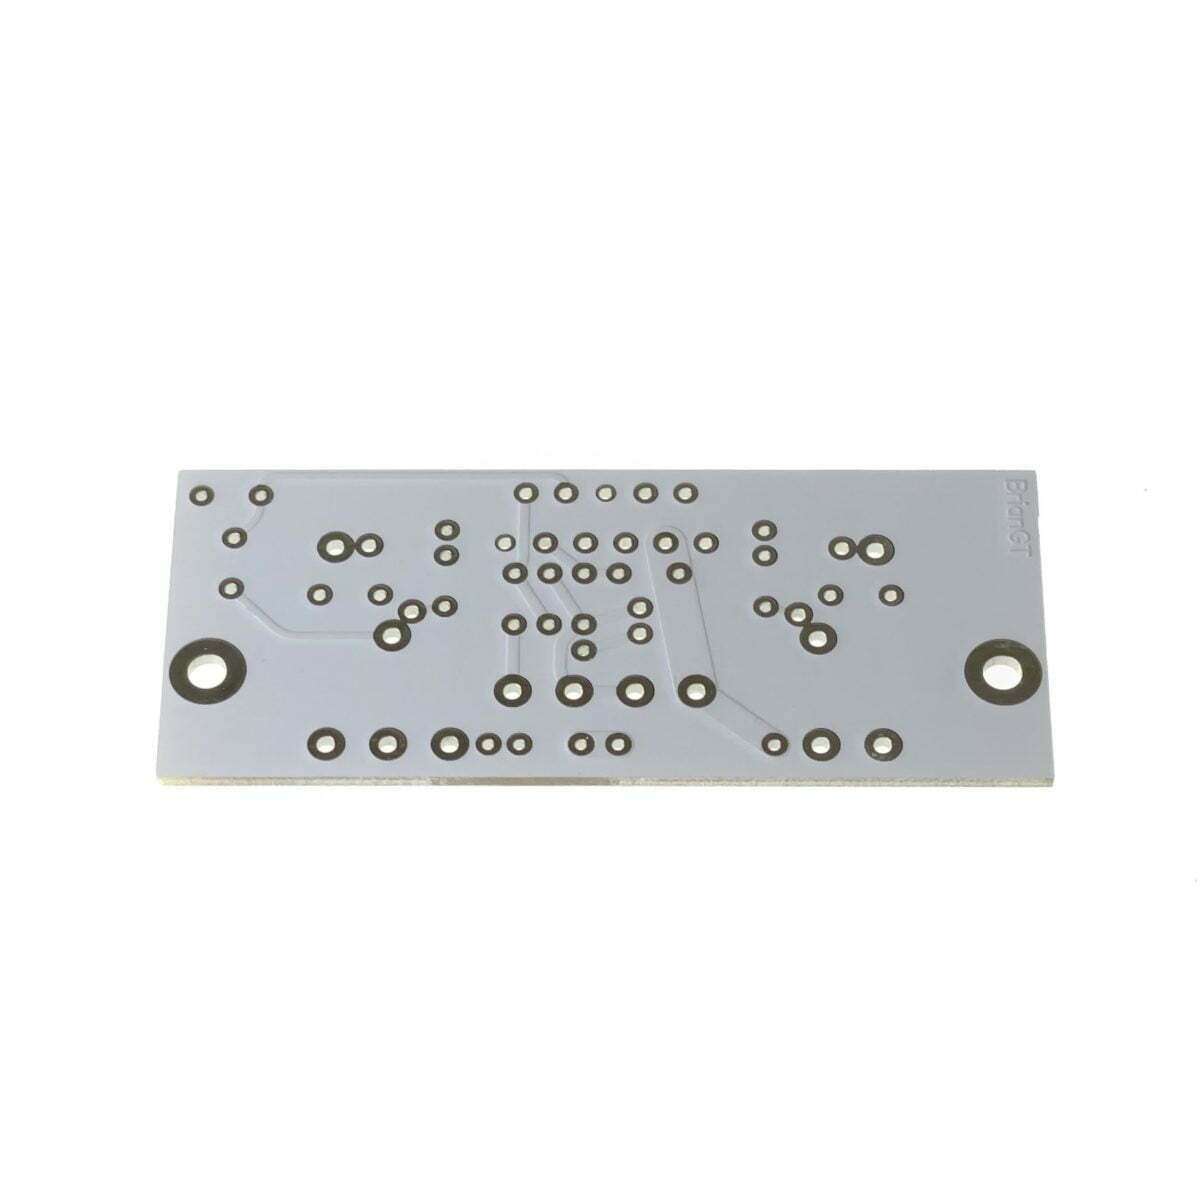 DIY LM3886 Amplifier PCB [chipamp.com]